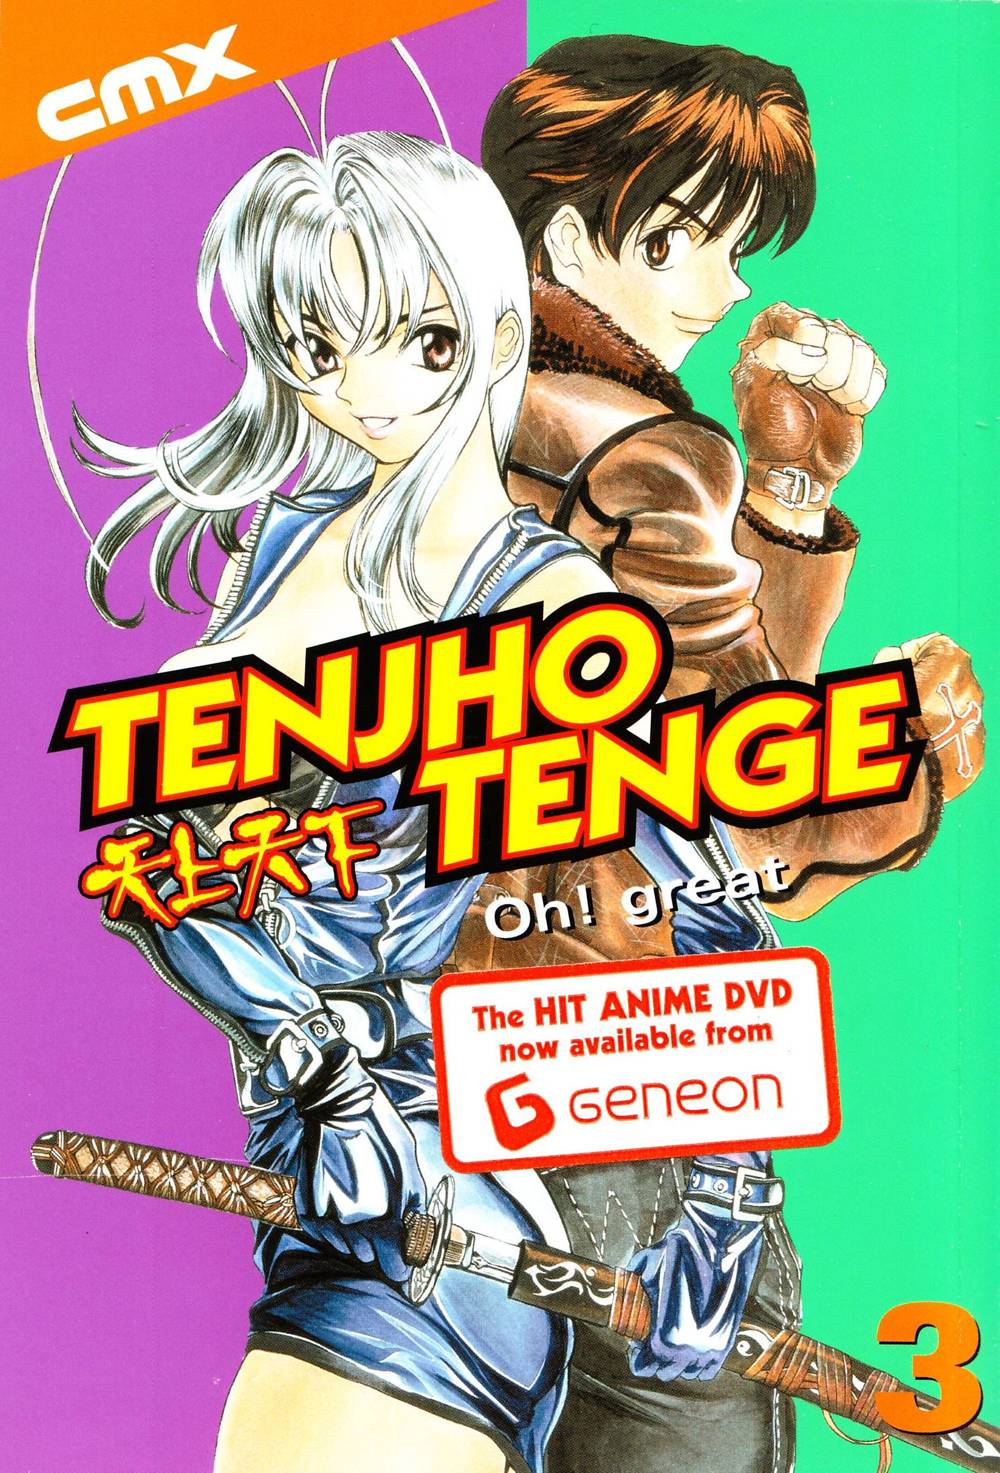 Tenjho Tenge - Round One